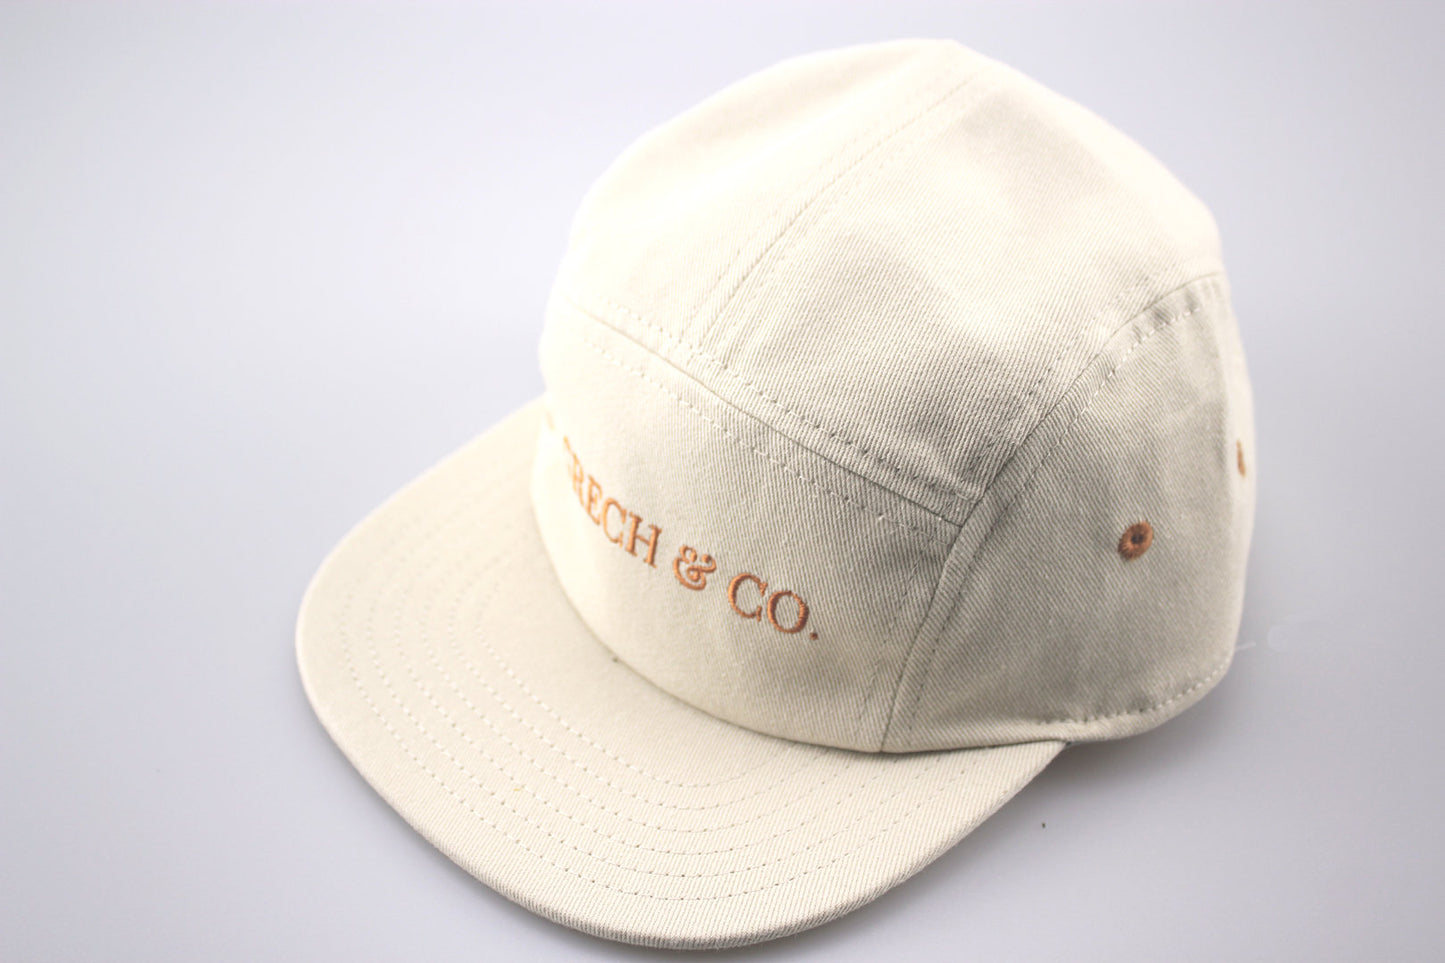 Kappe / Mütze, Farbe: Buff - Größe S/M/L - GRECH & CO Cap